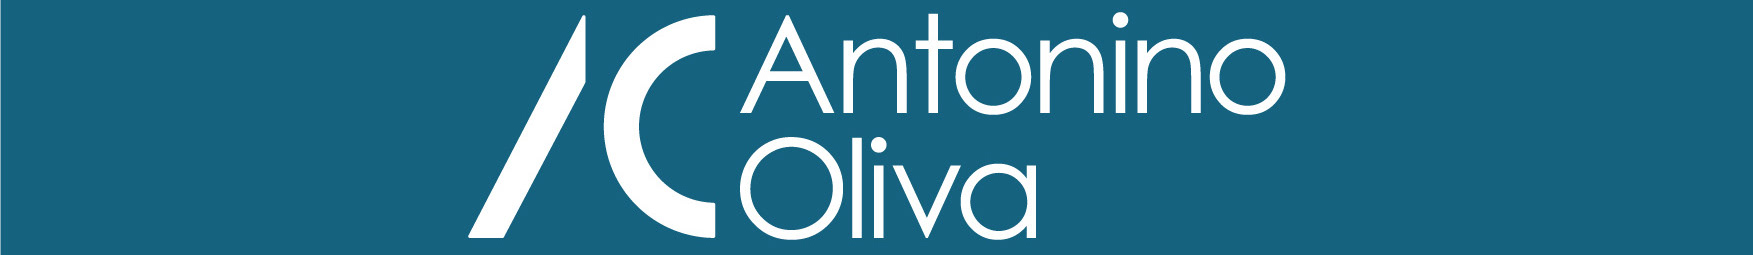 Bannière de profil de Antonino Oliva